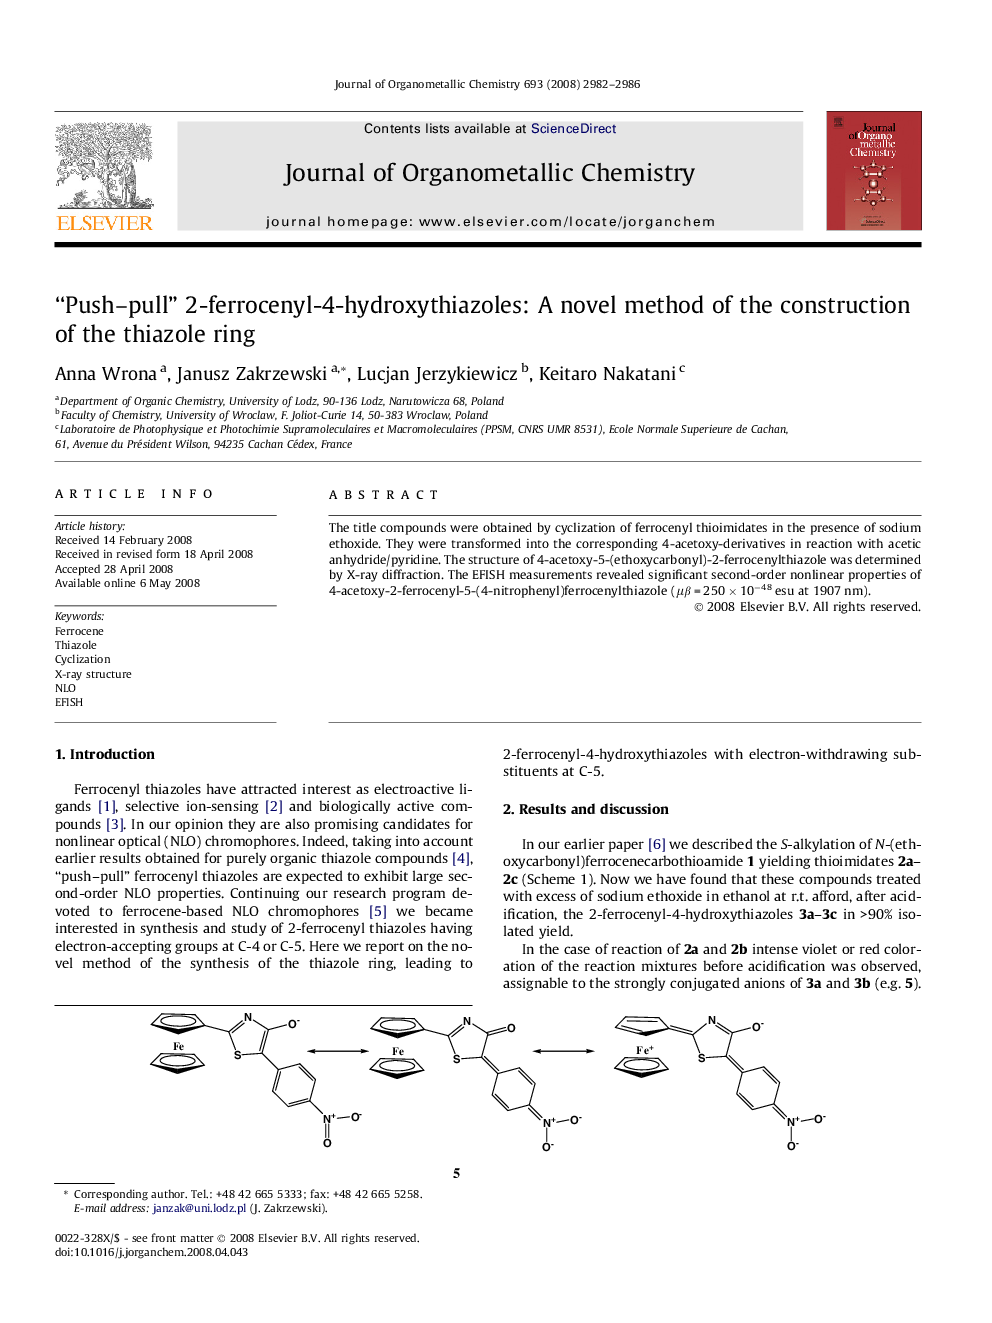 “Push-pull” 2-ferrocenyl-4-hydroxythiazoles: A novel method of the construction of the thiazole ring